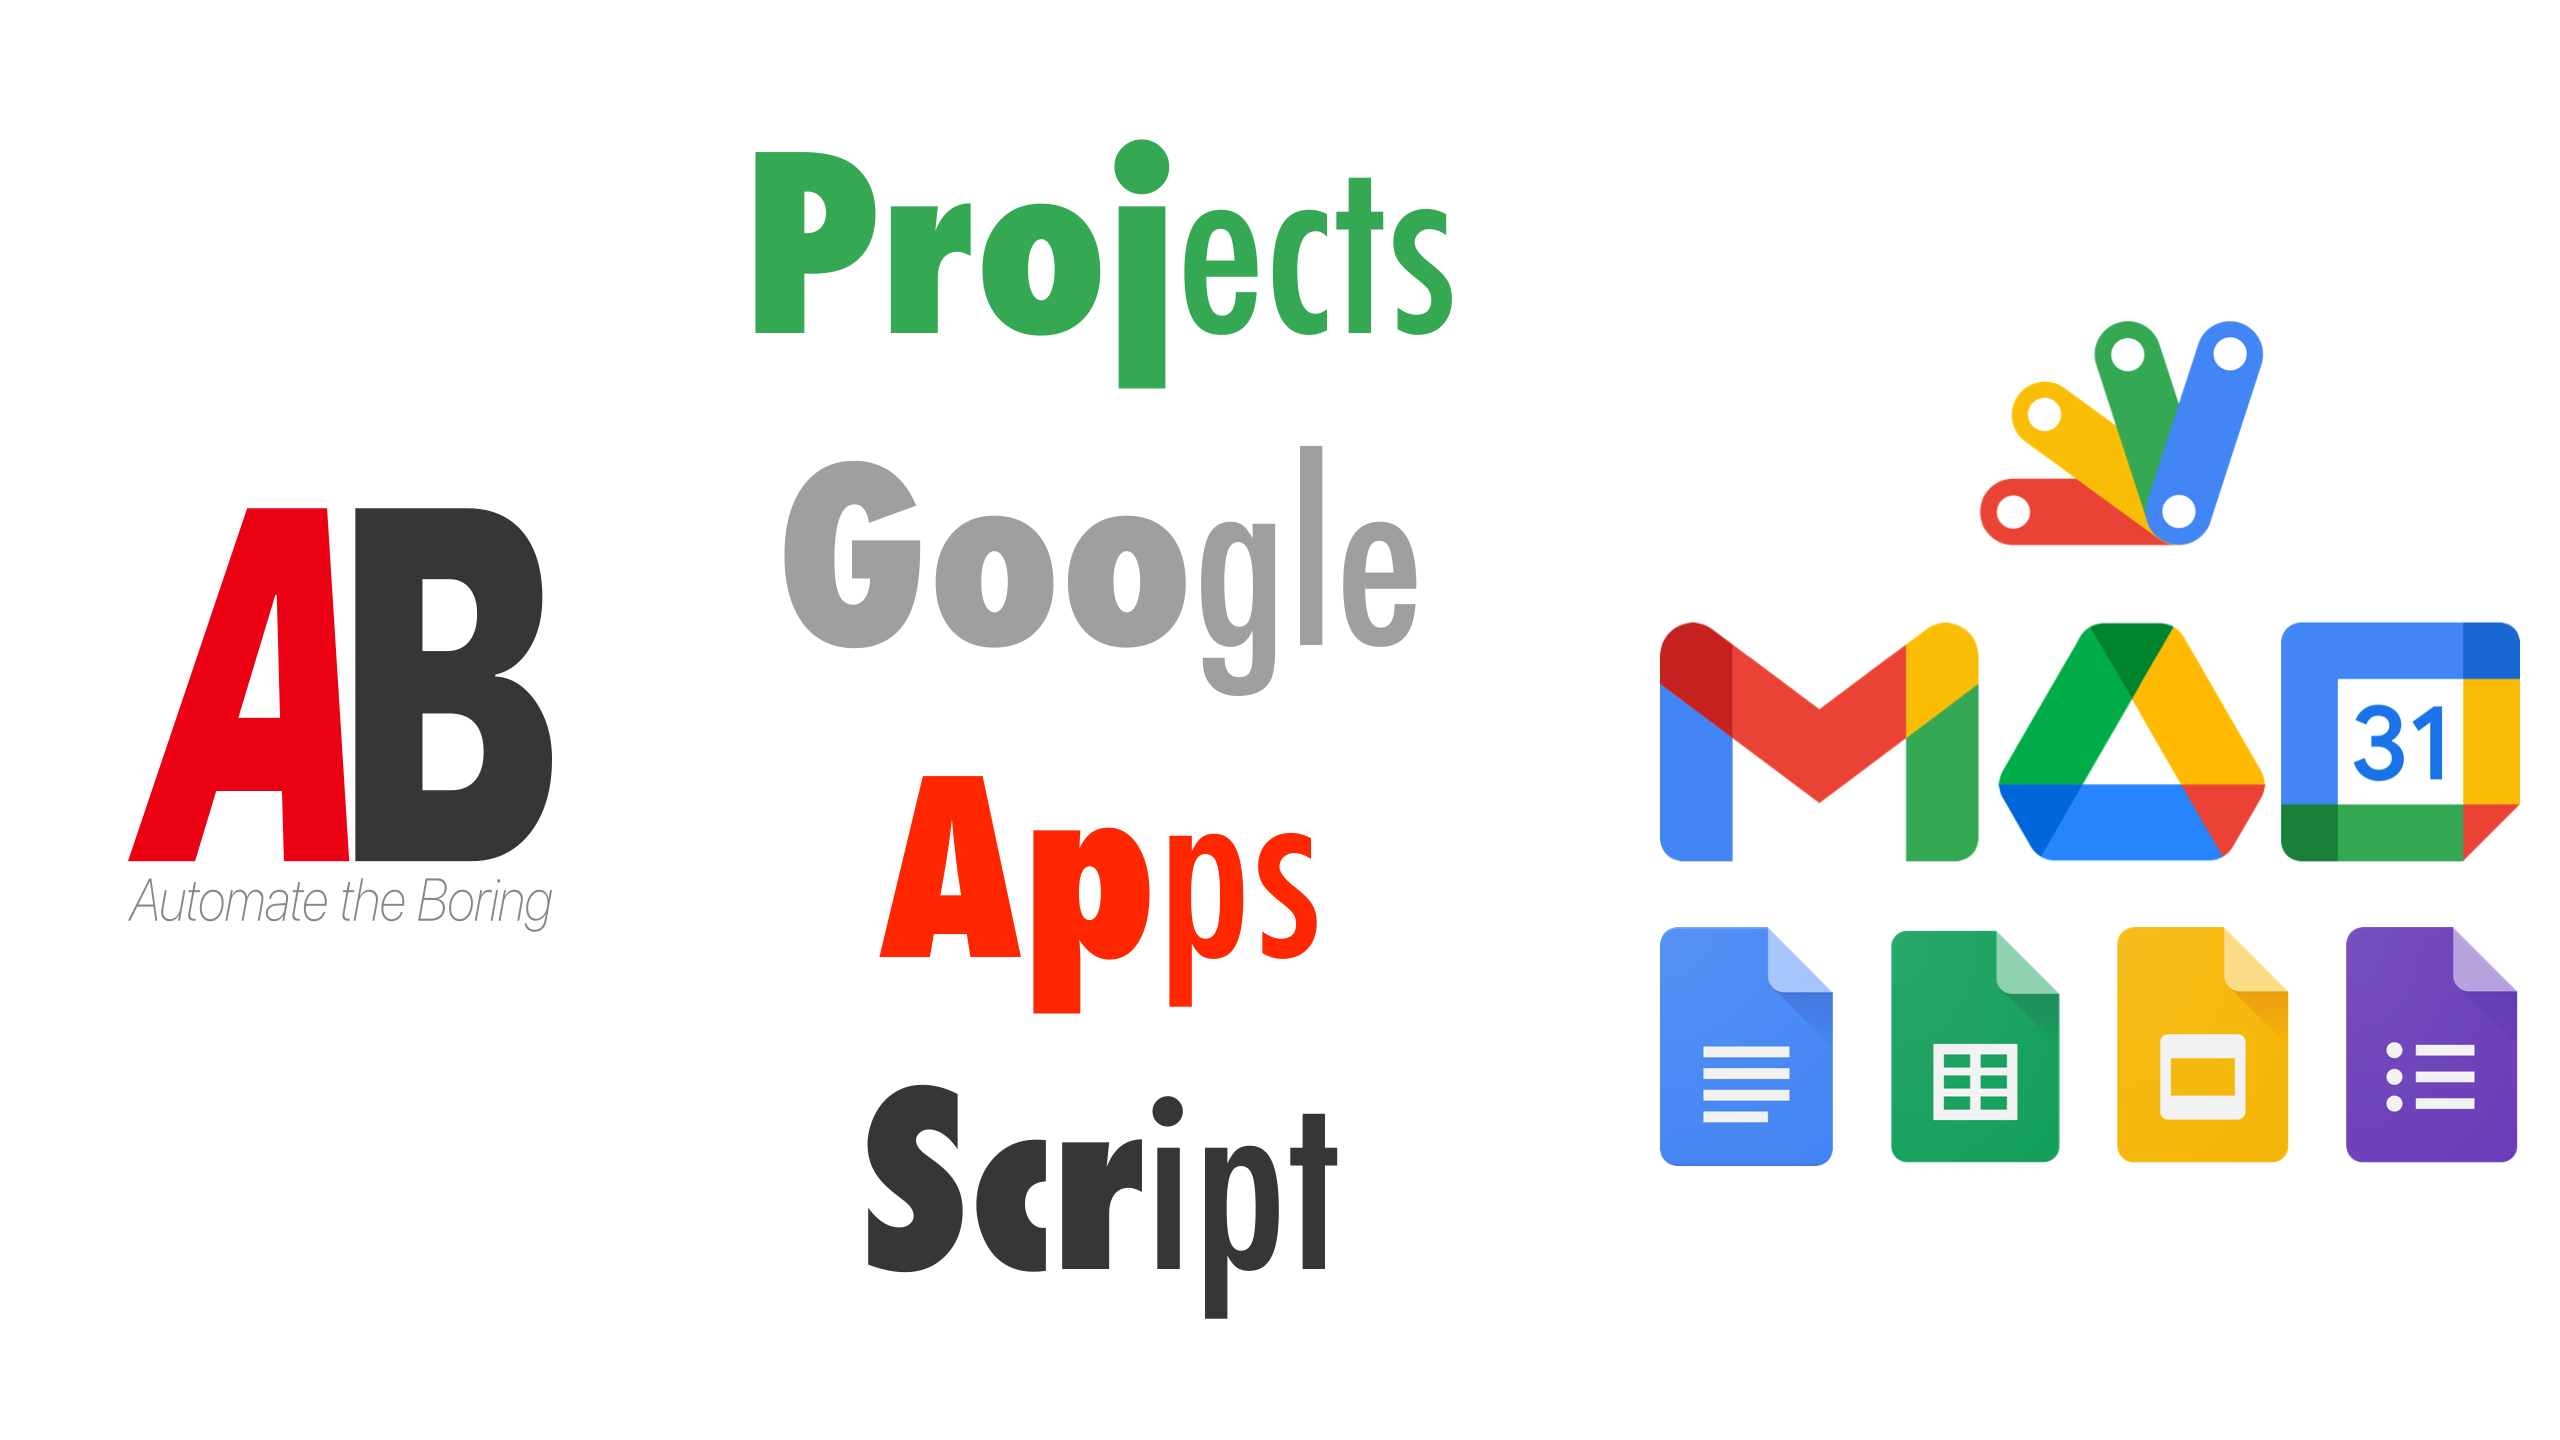 Projects - Google Apps Script